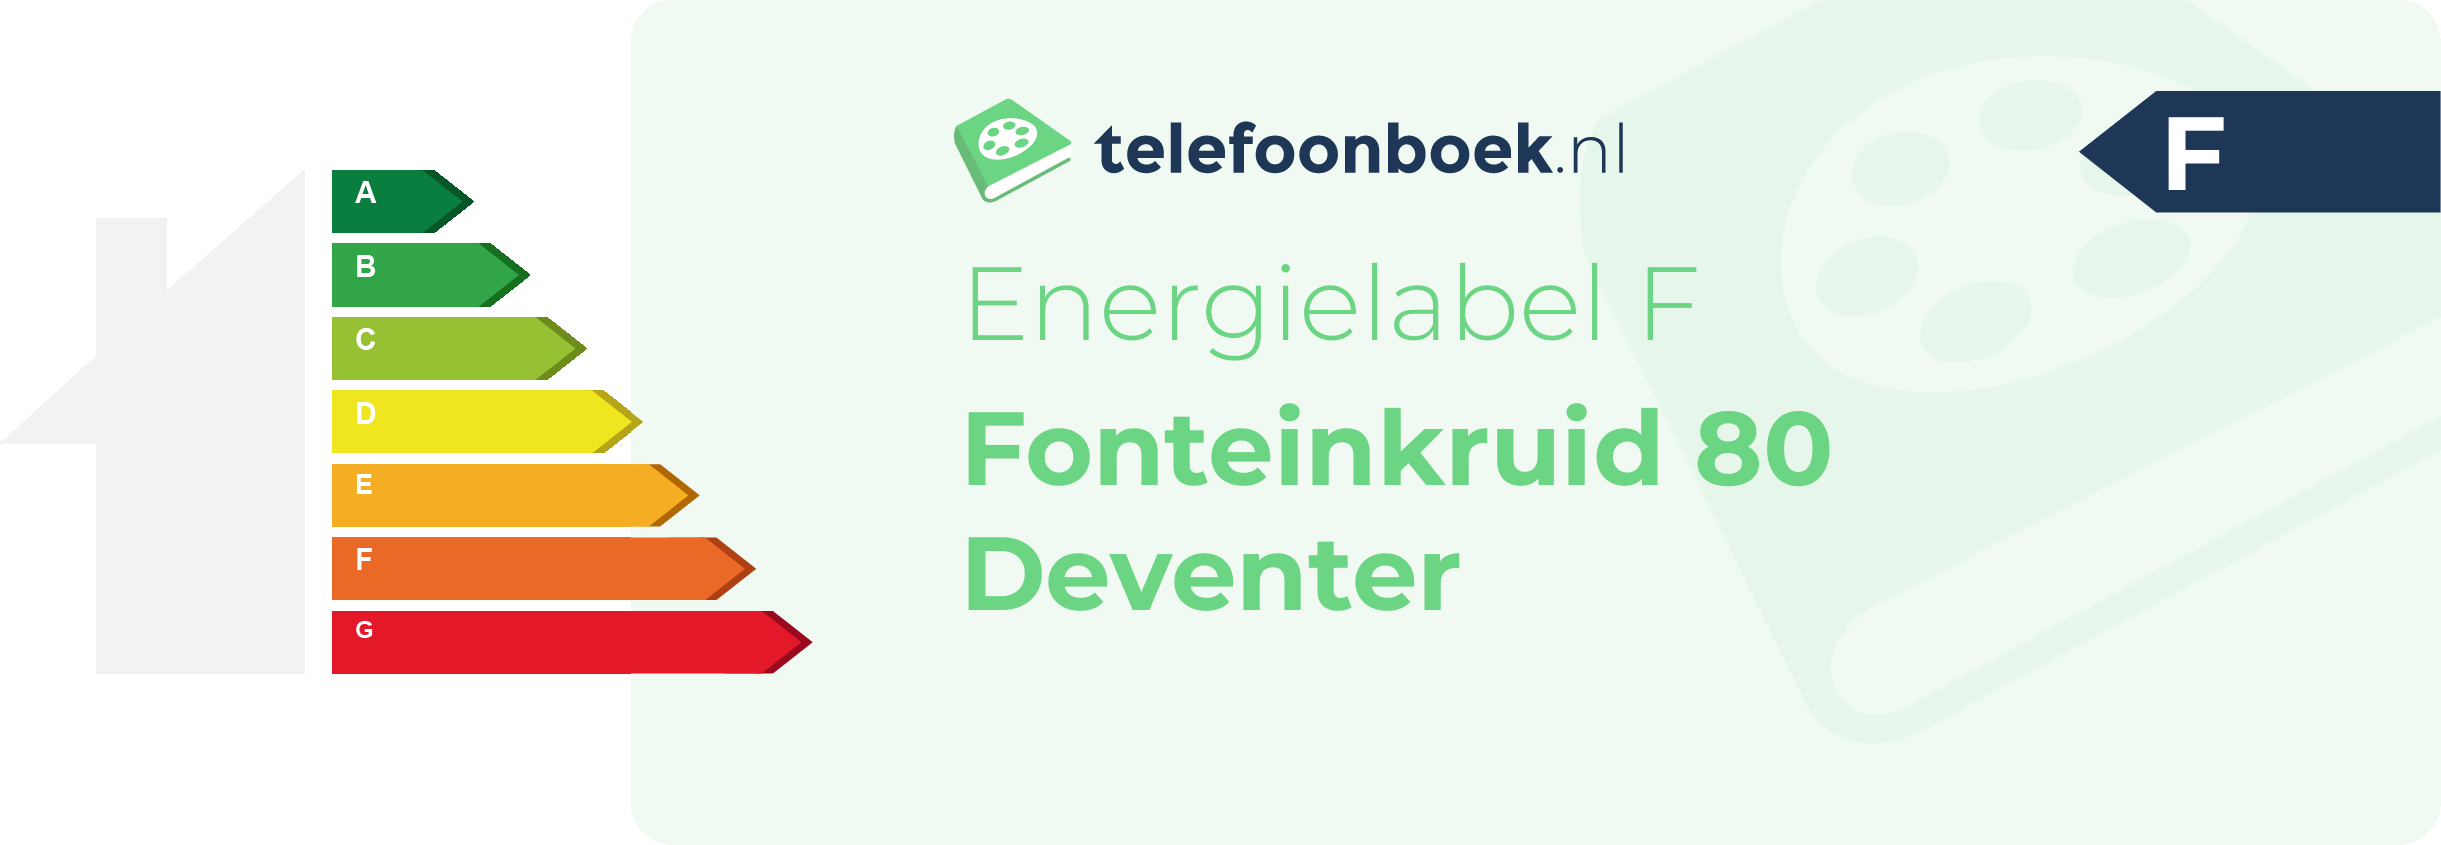 Energielabel Fonteinkruid 80 Deventer